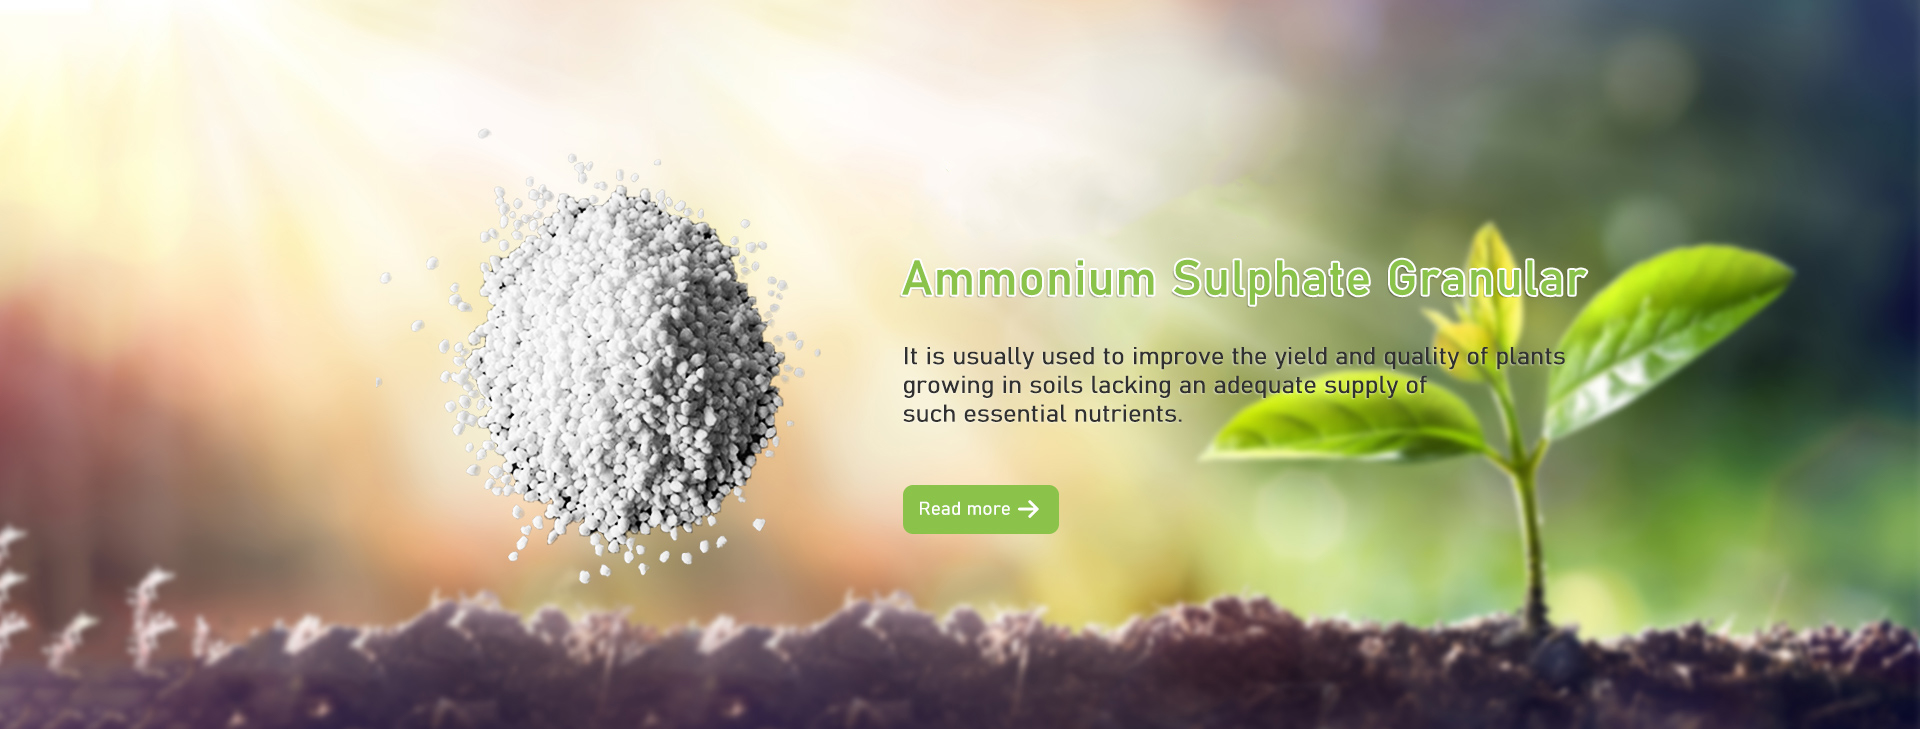 amonium sulfat